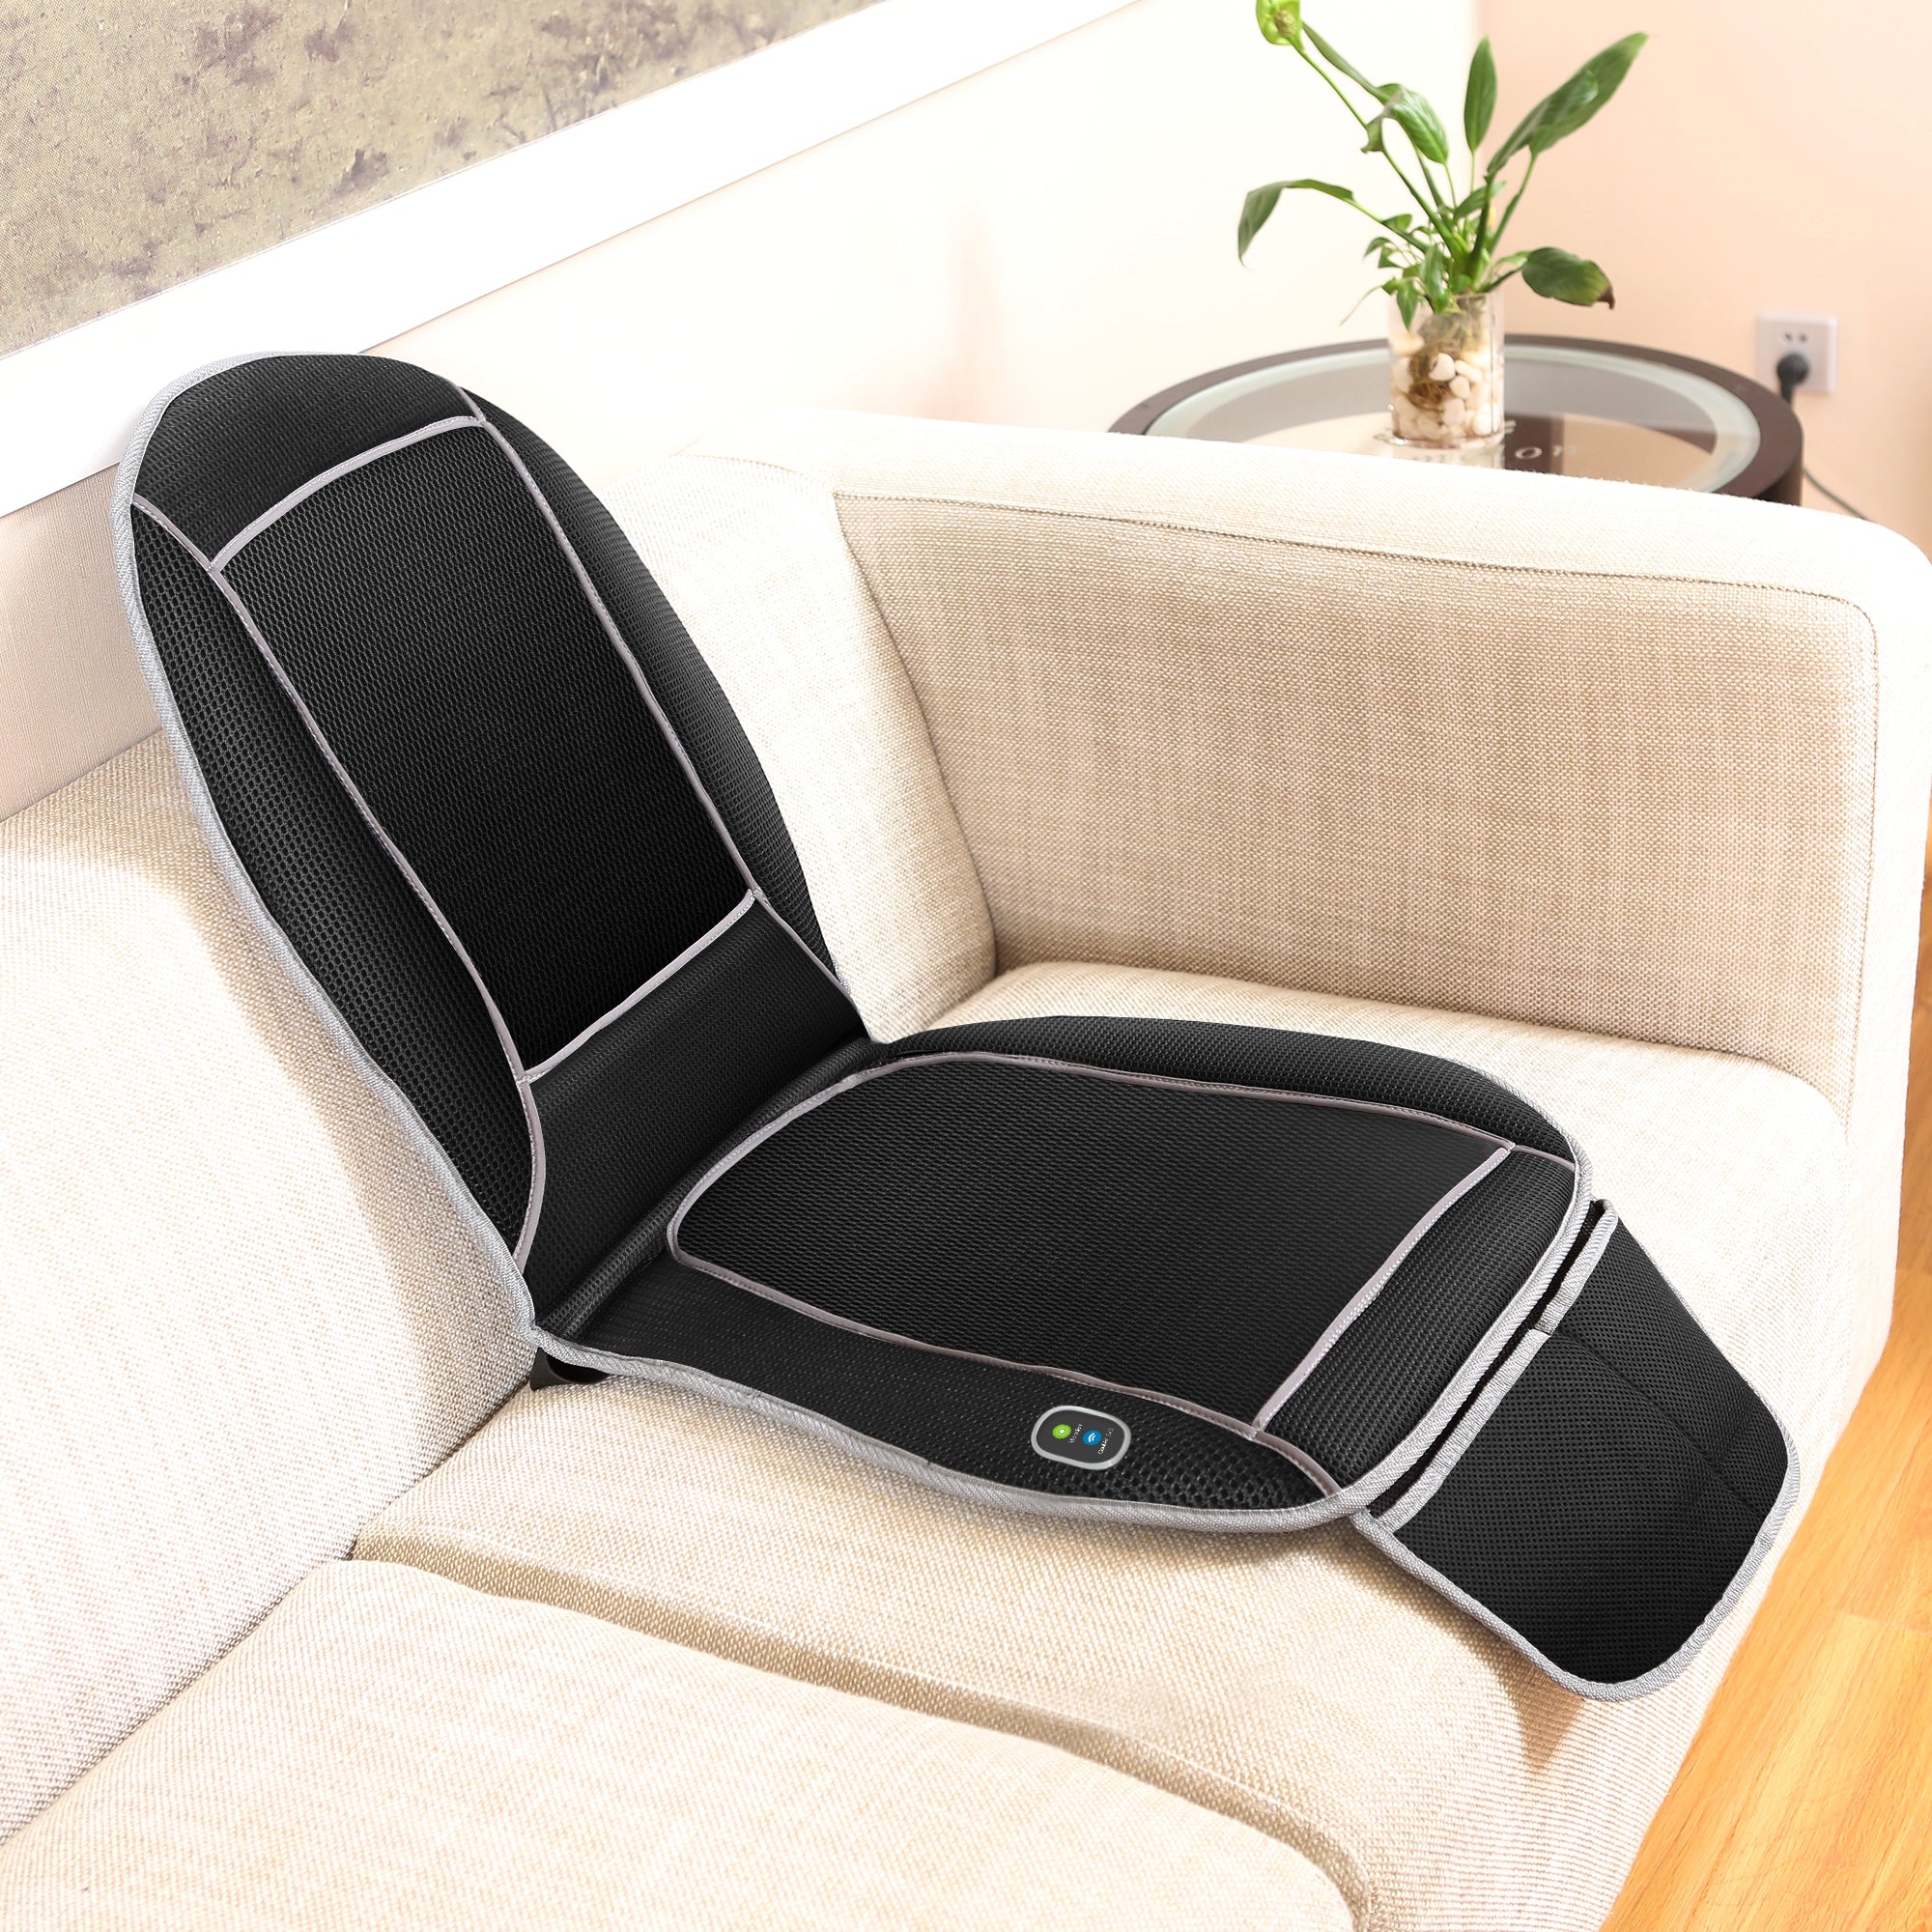 Do Car Seat Cushions Help Lower Back Pain?